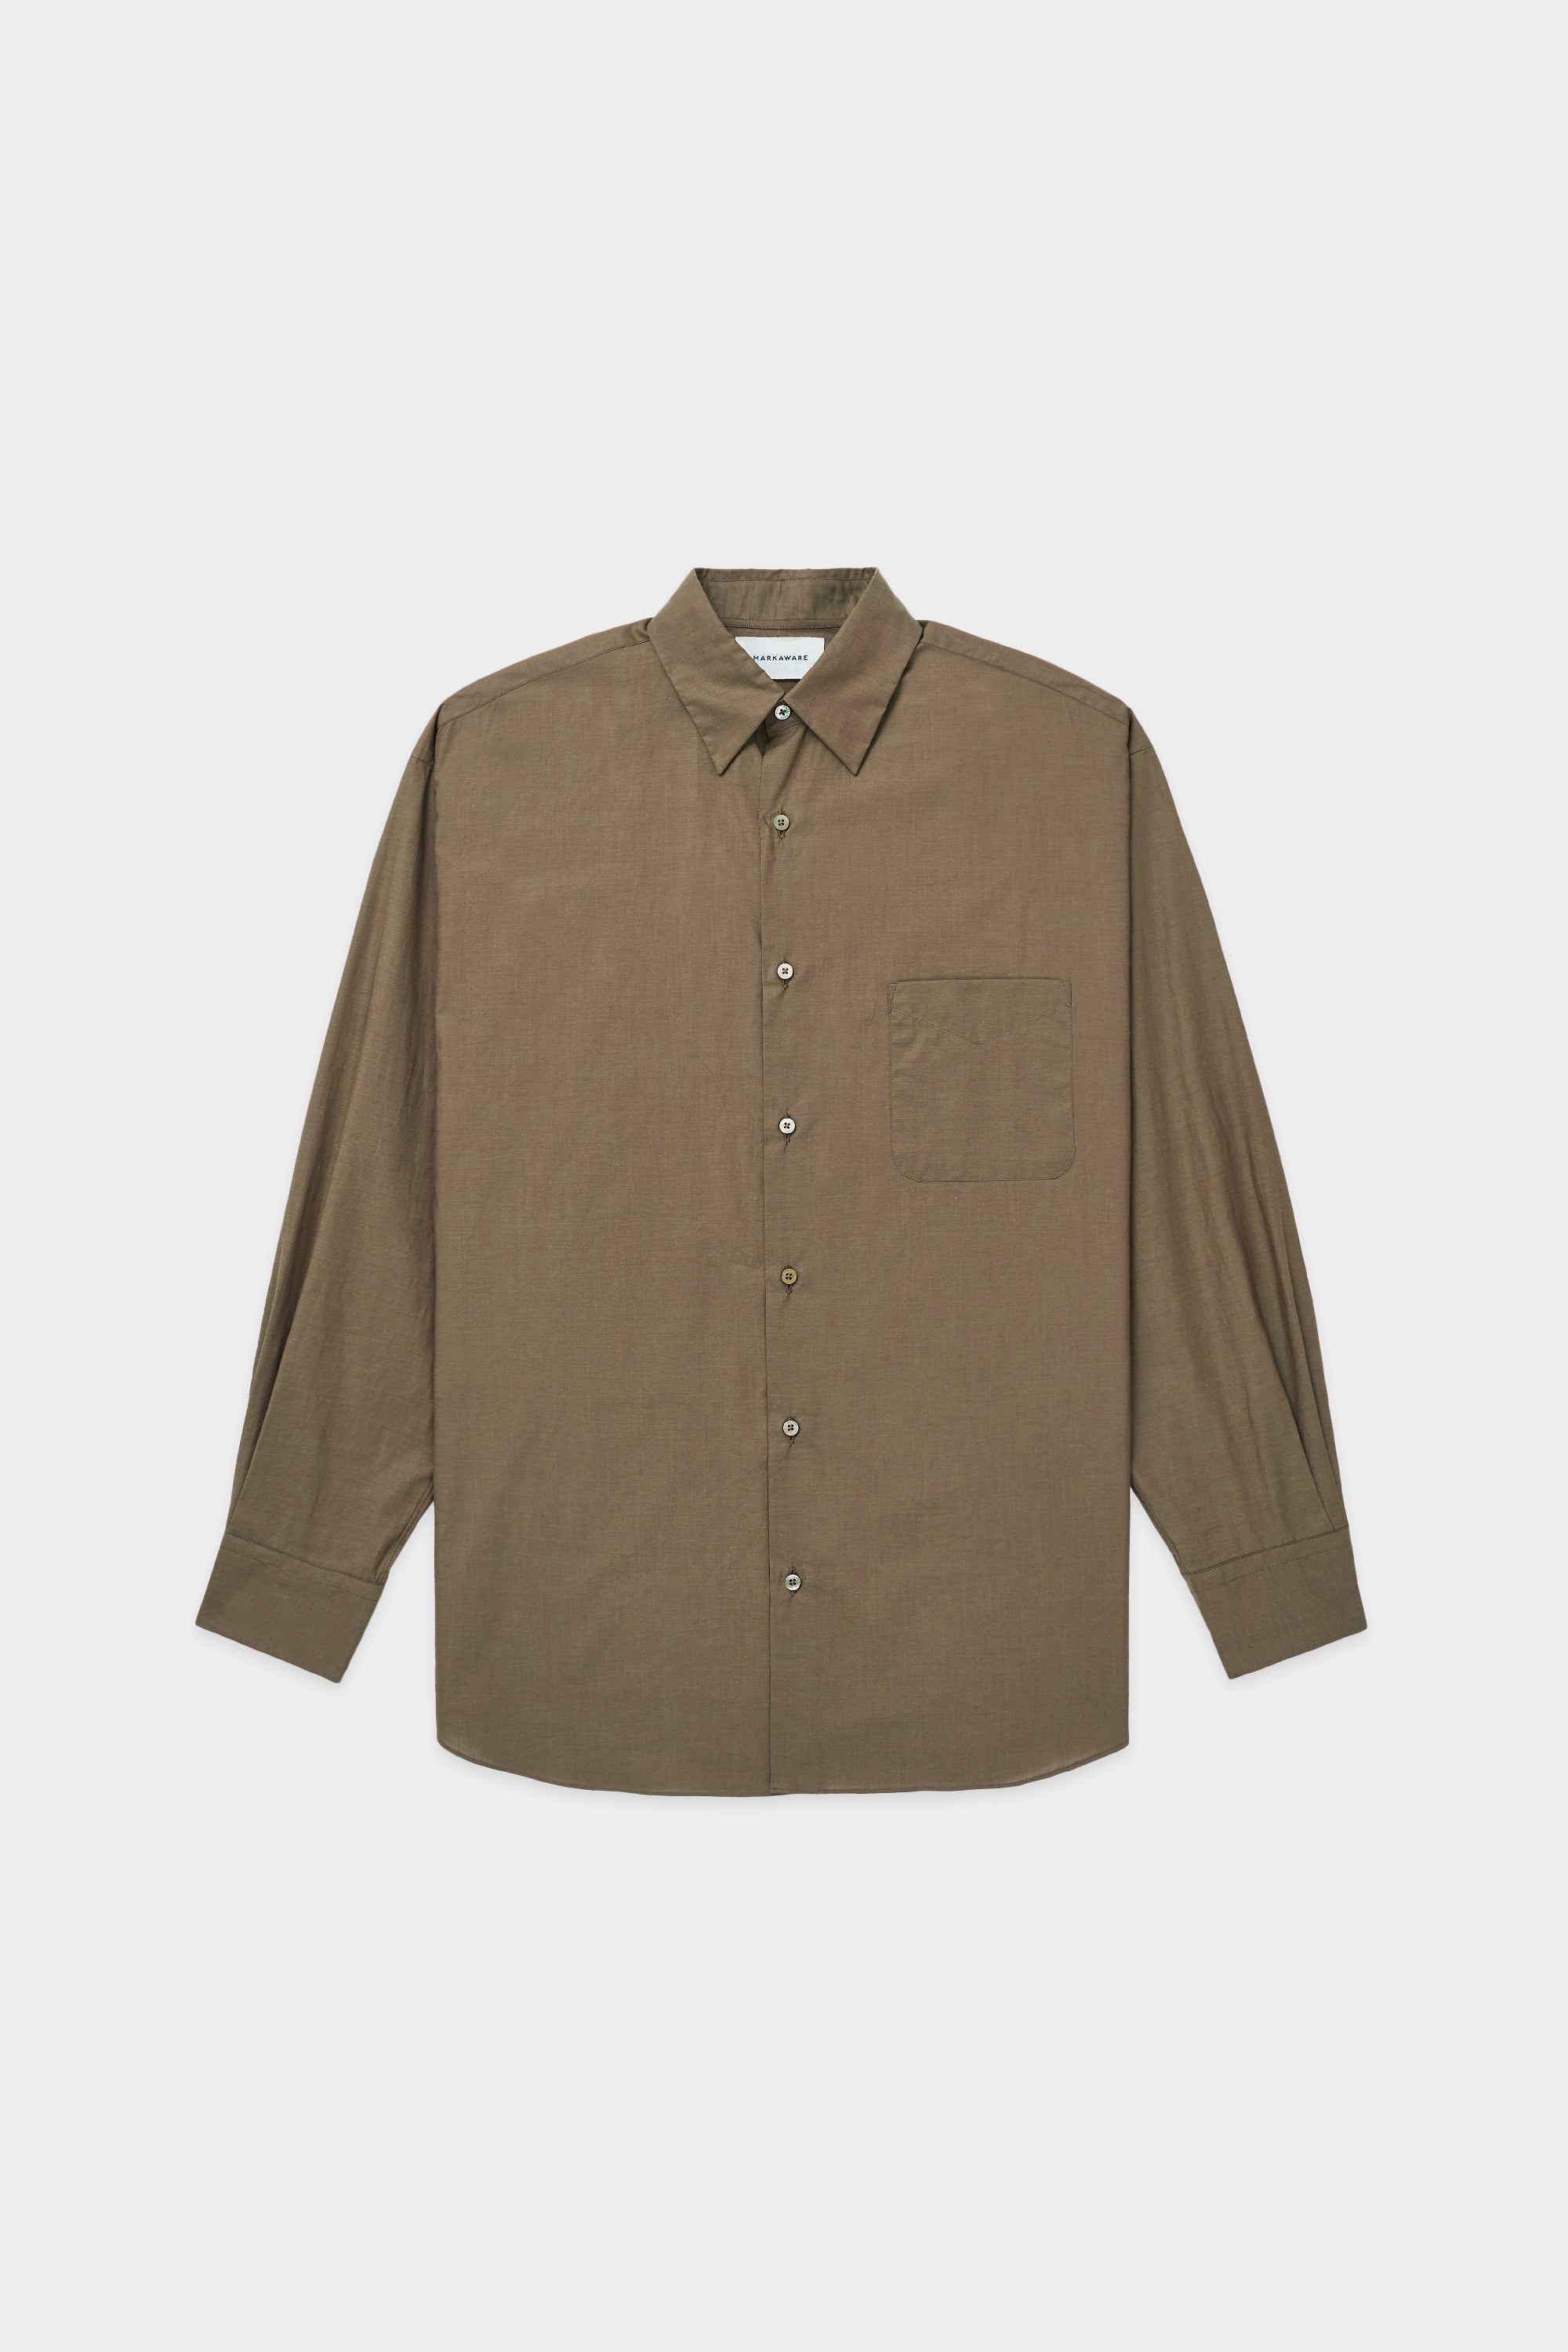 Soktas Organic Cotton Poplin New Comfort Fit Shirt, Brown